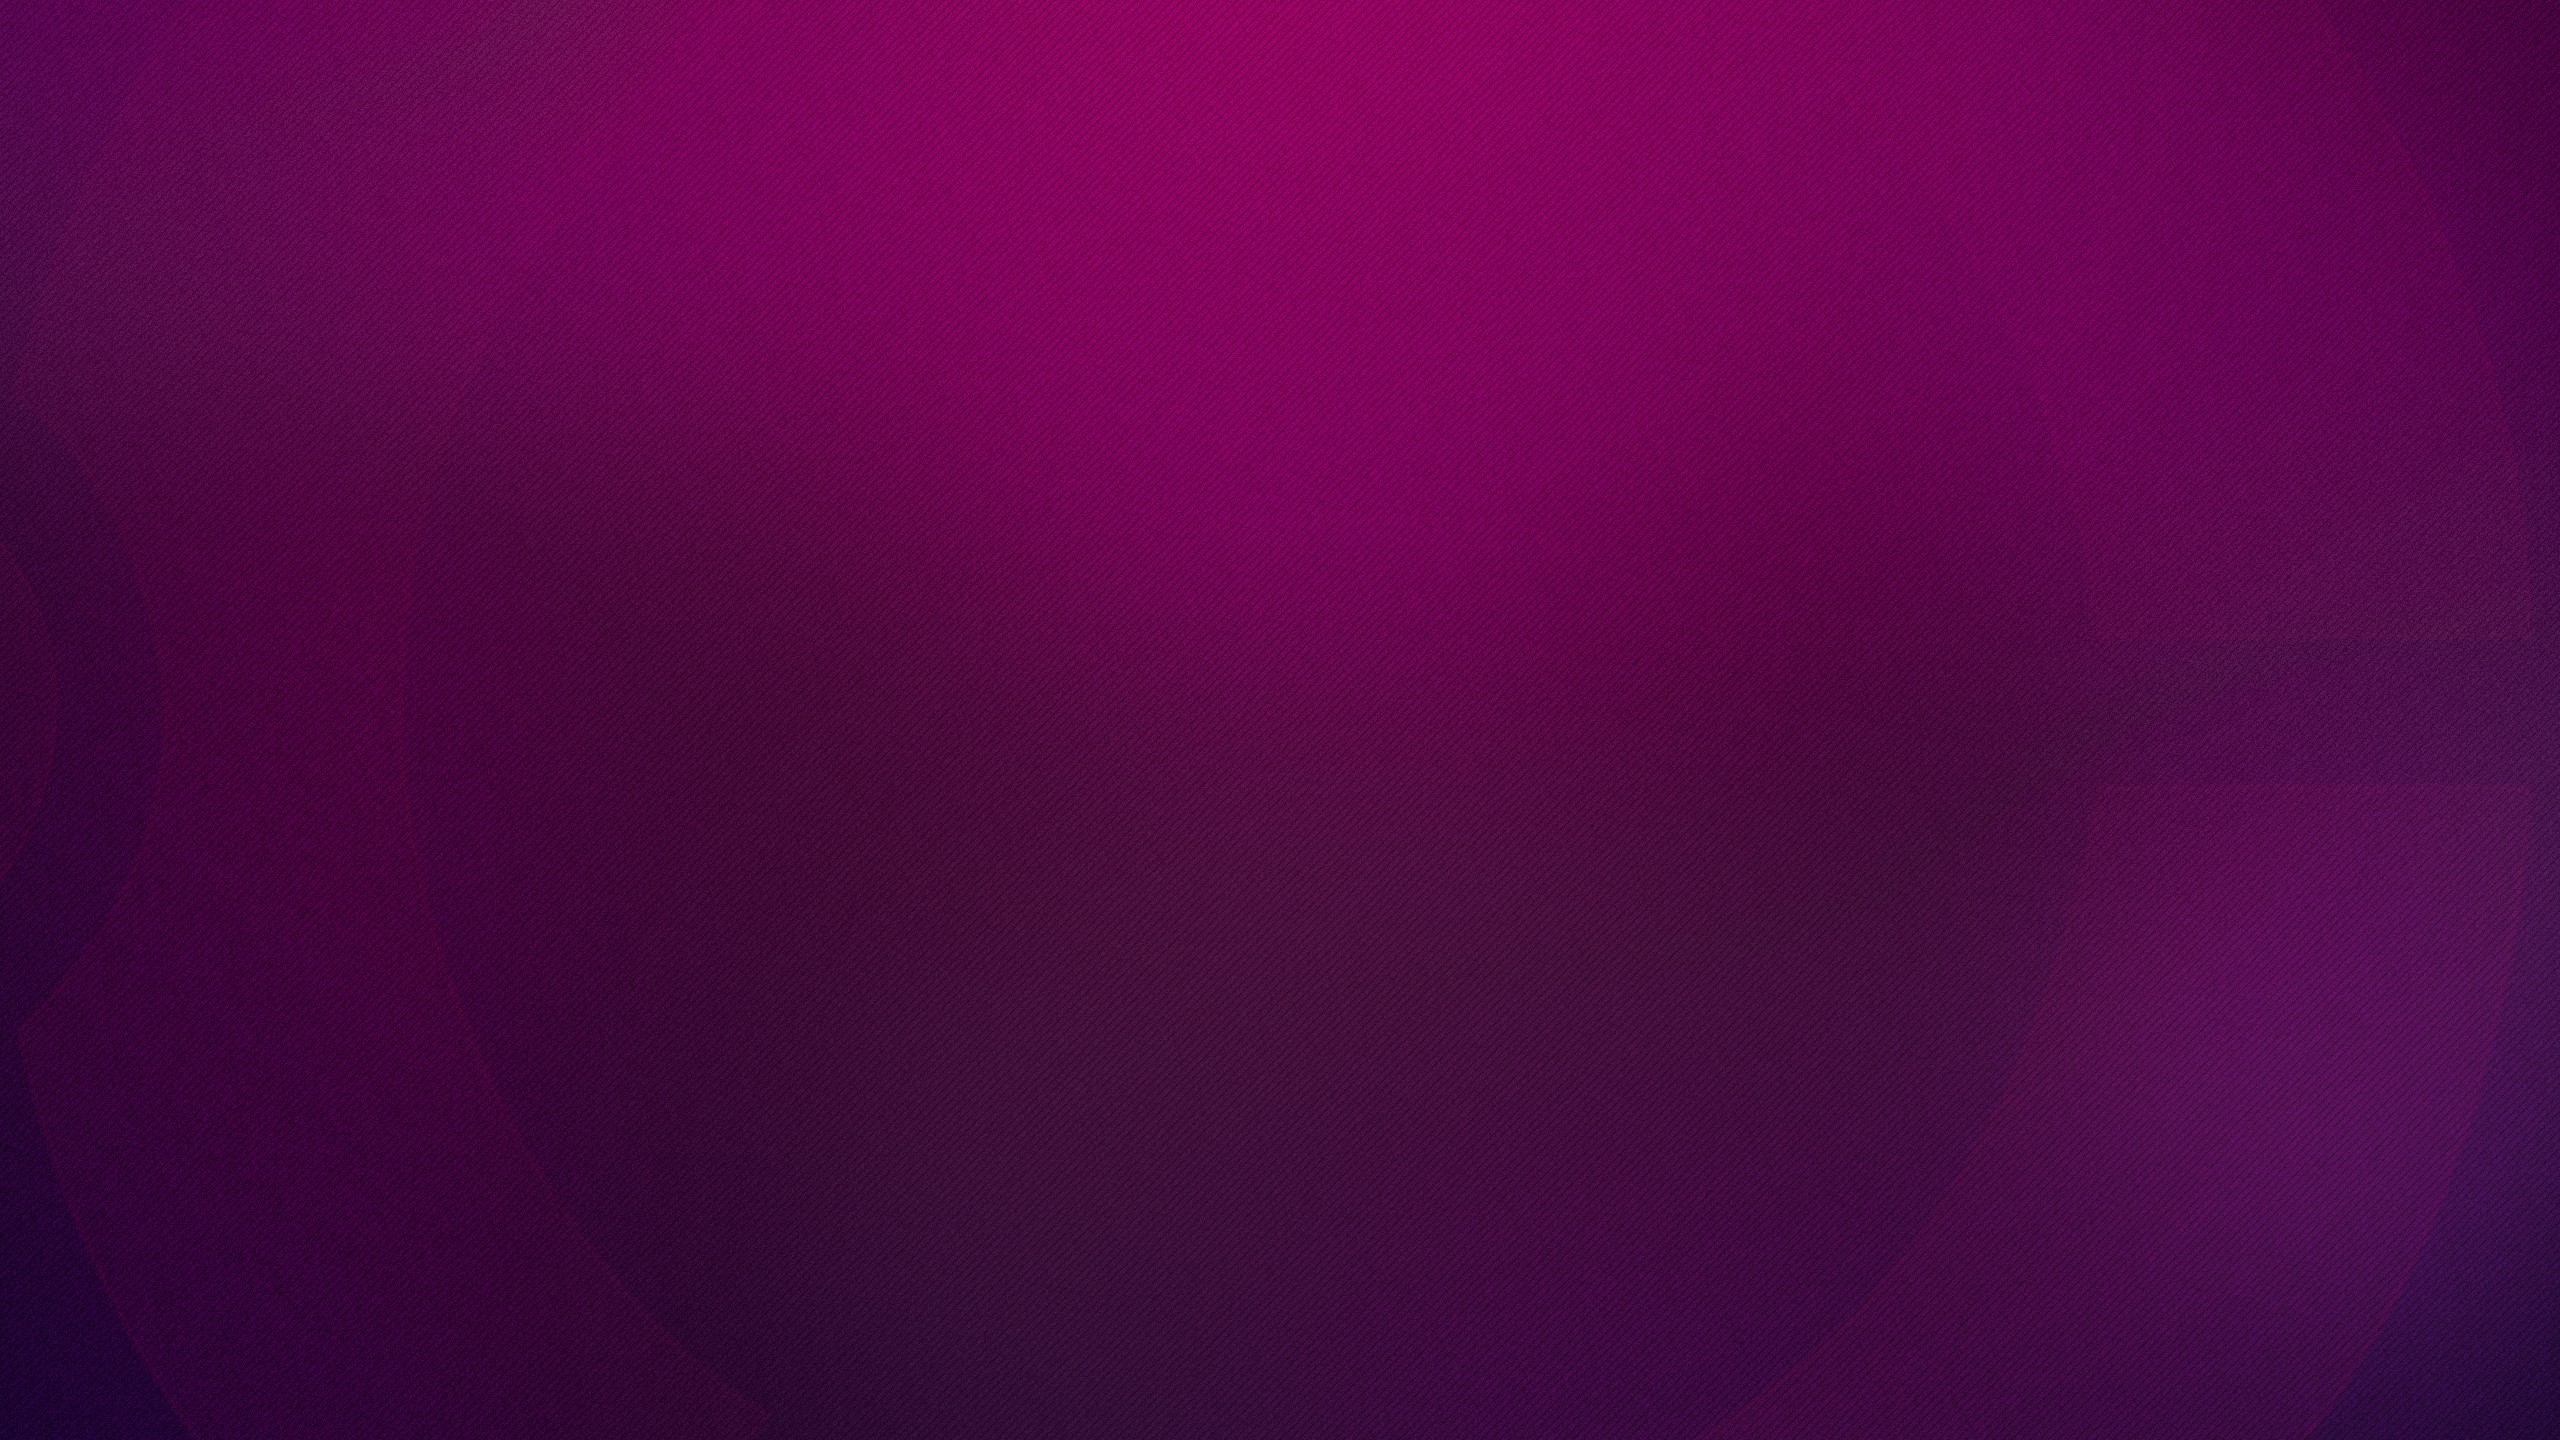 General 2560x1440 abstract Ubuntu gradient texture simple background digital art